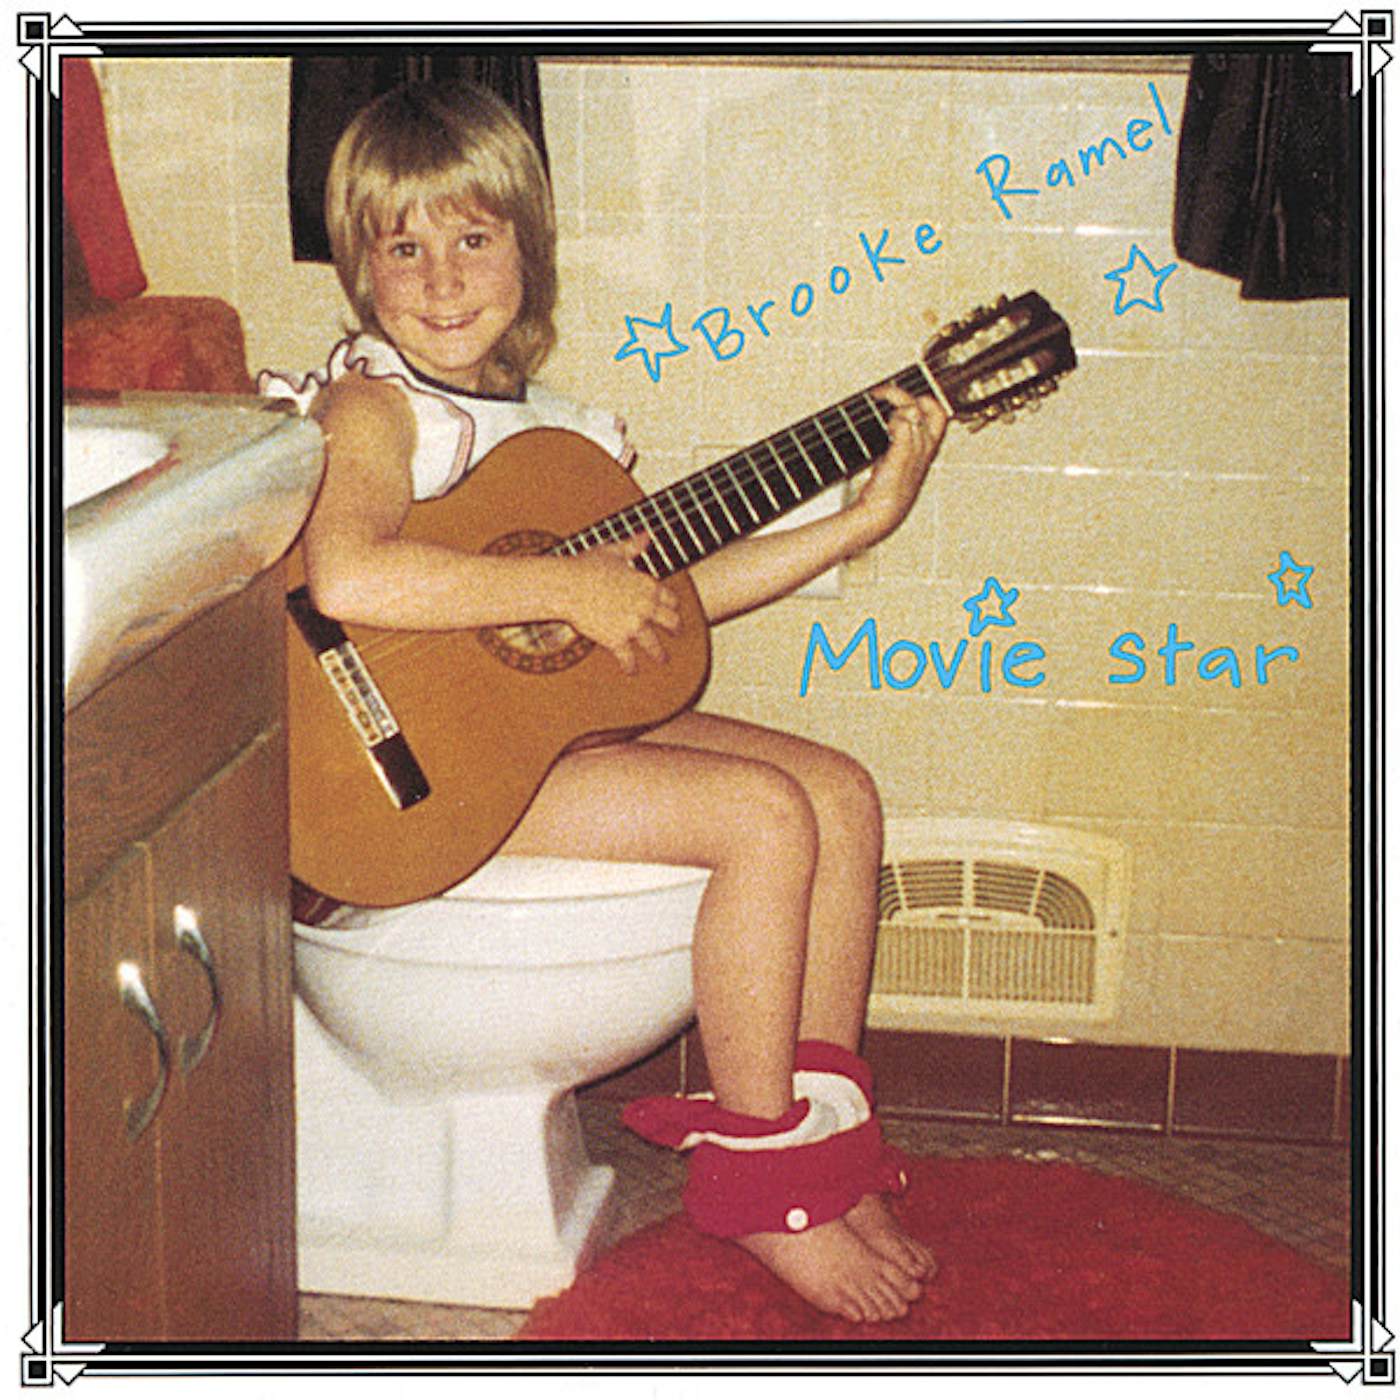 Brooke Ramel MOVIE STAR CD